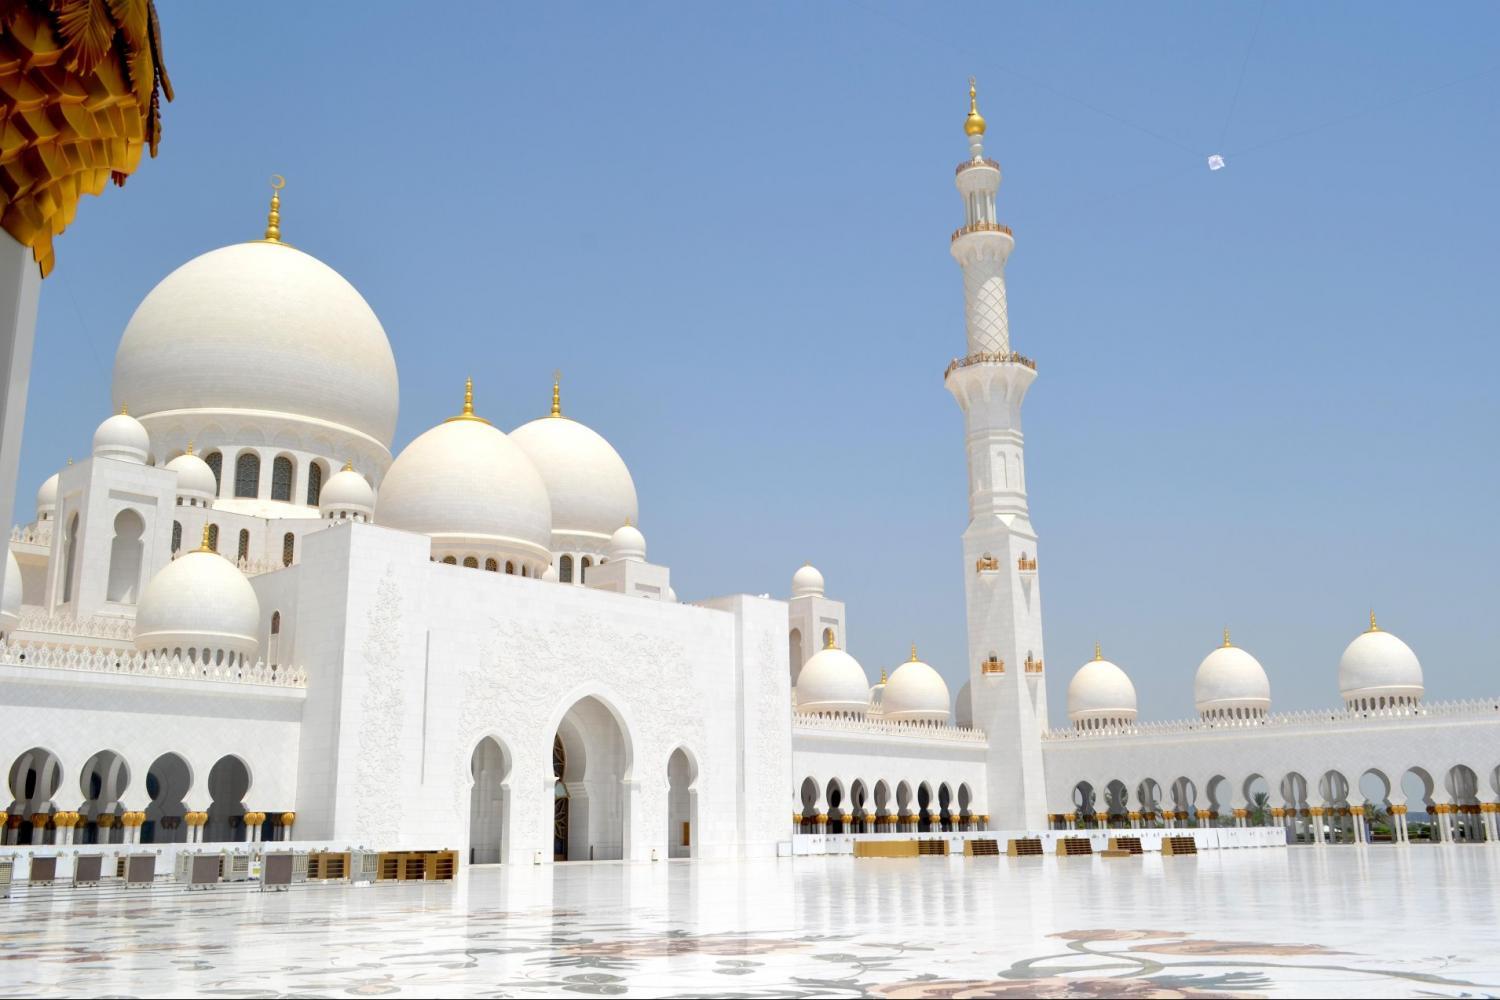 Abu-Dabi-Mosque-&-Warner-Bros-Tour-from-Dubai-9